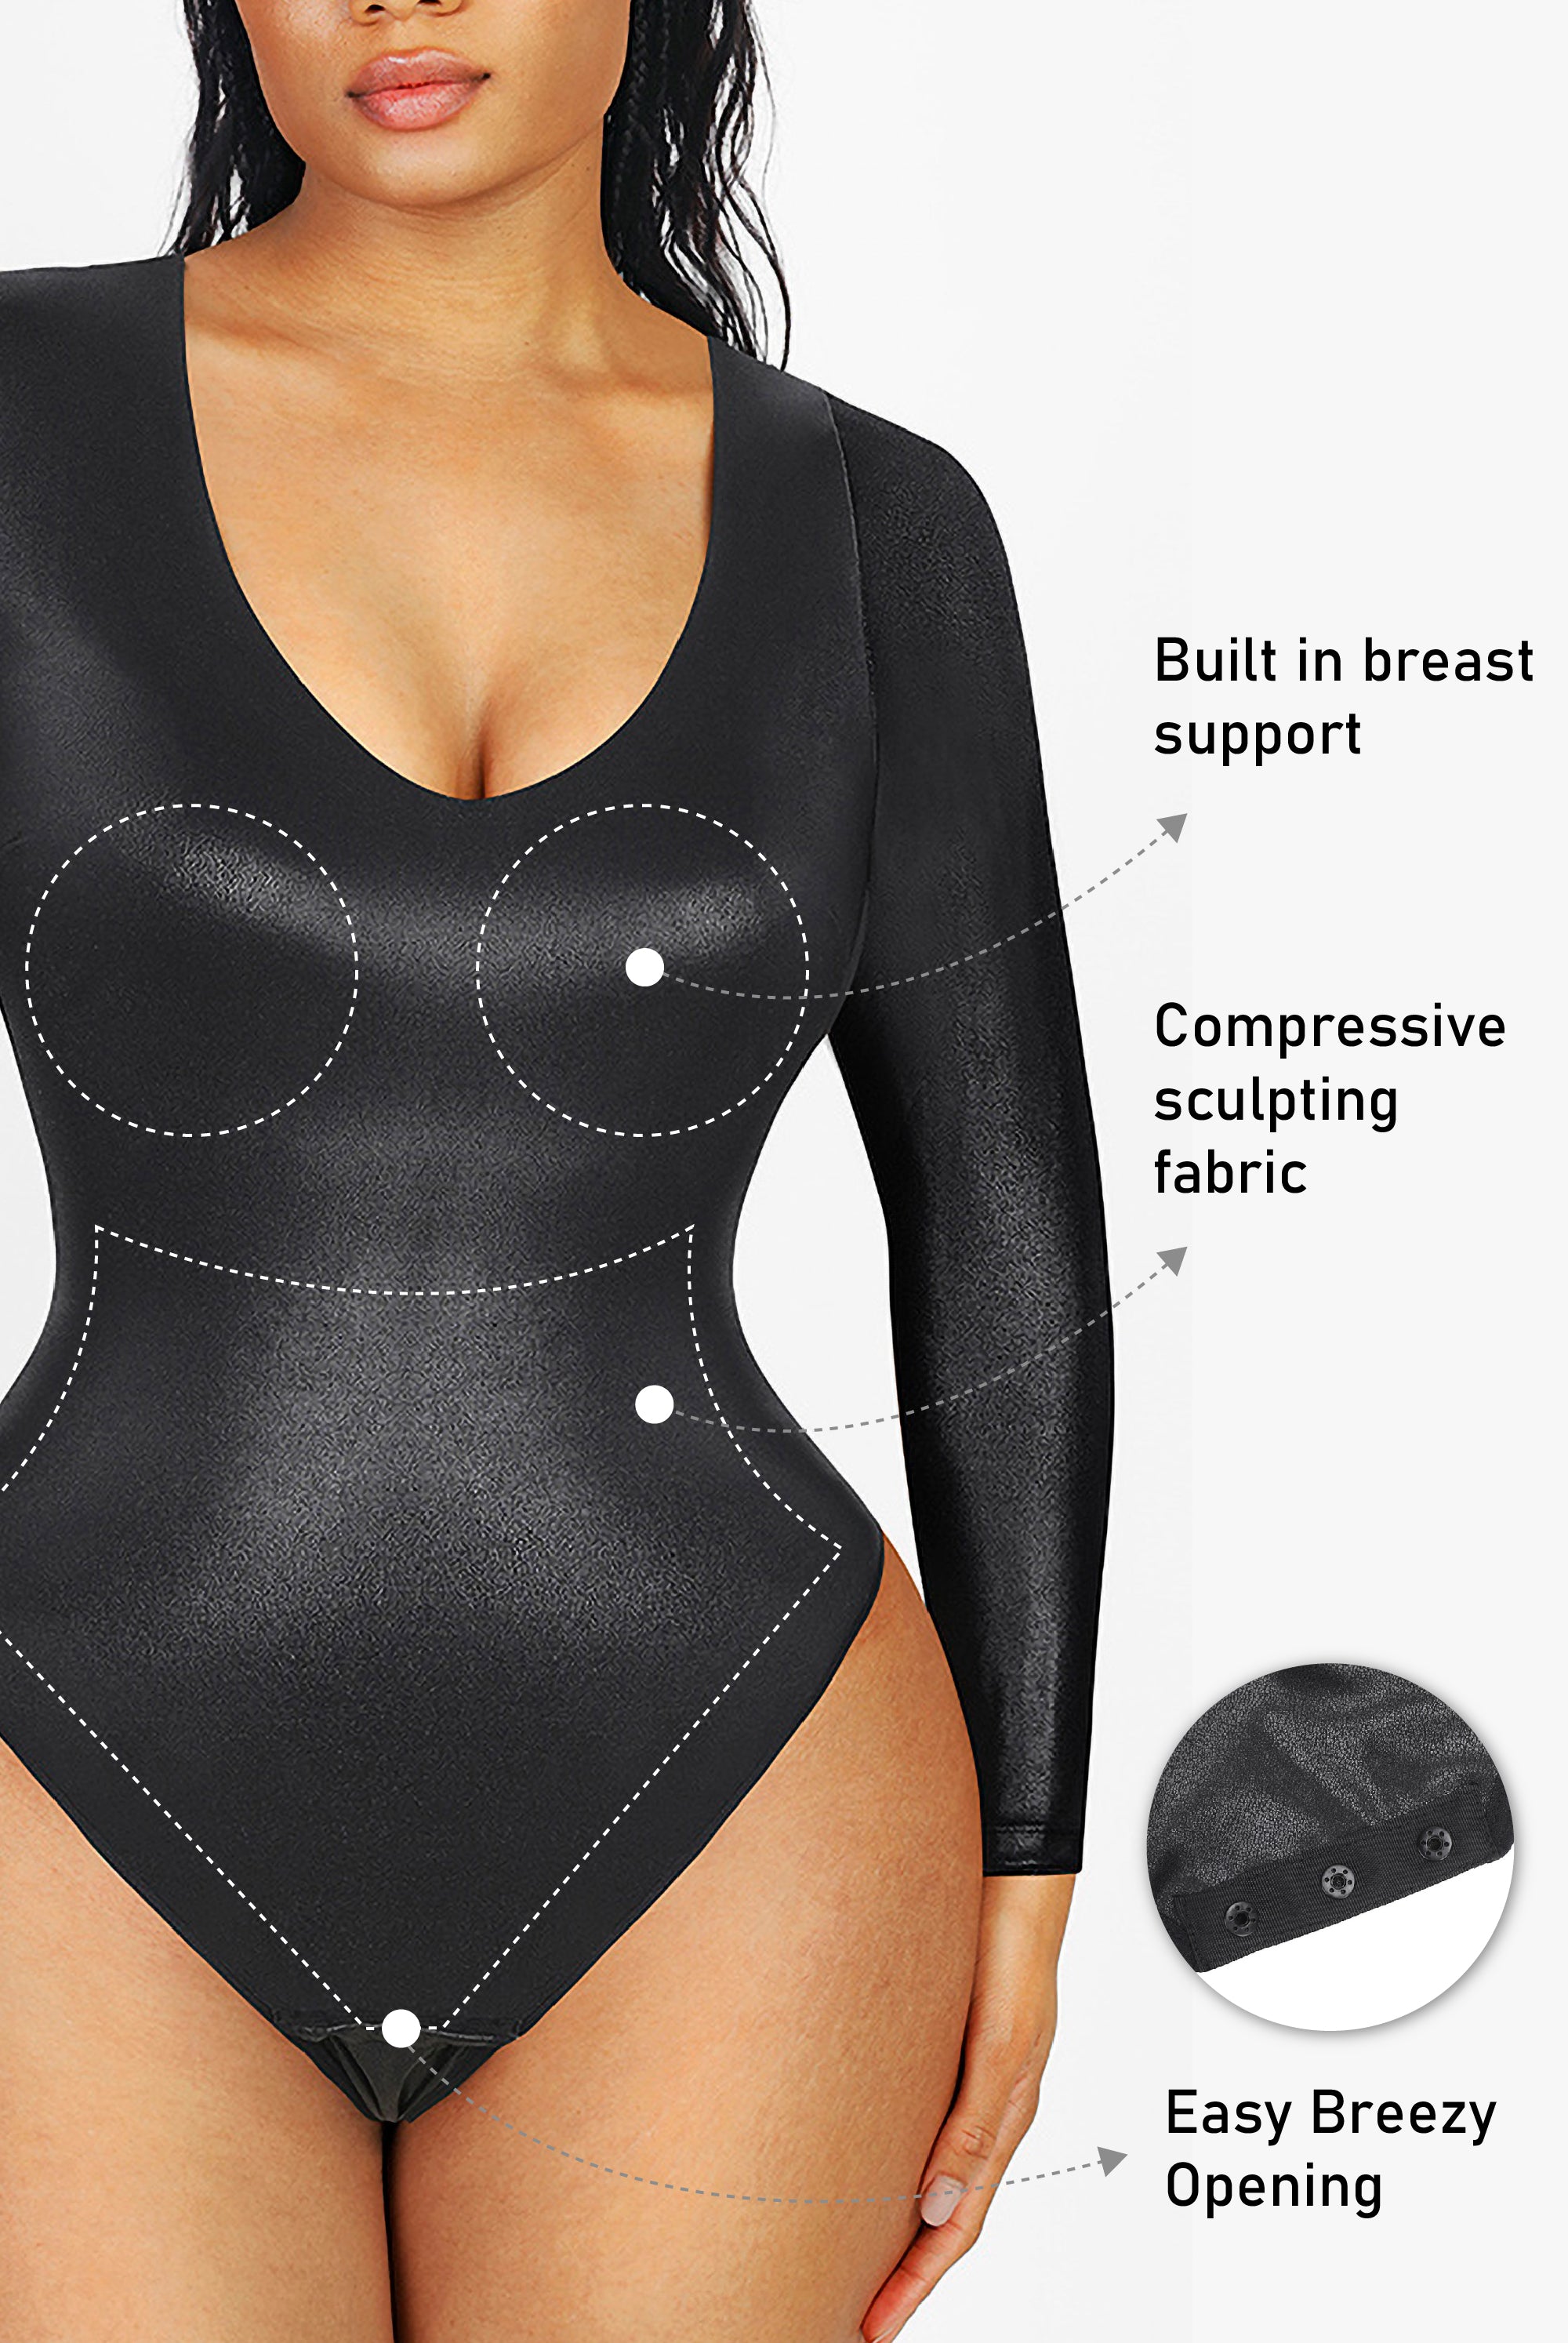 Faux Leather Bodysuit / Swimsuit : 8 Steps - Instructables